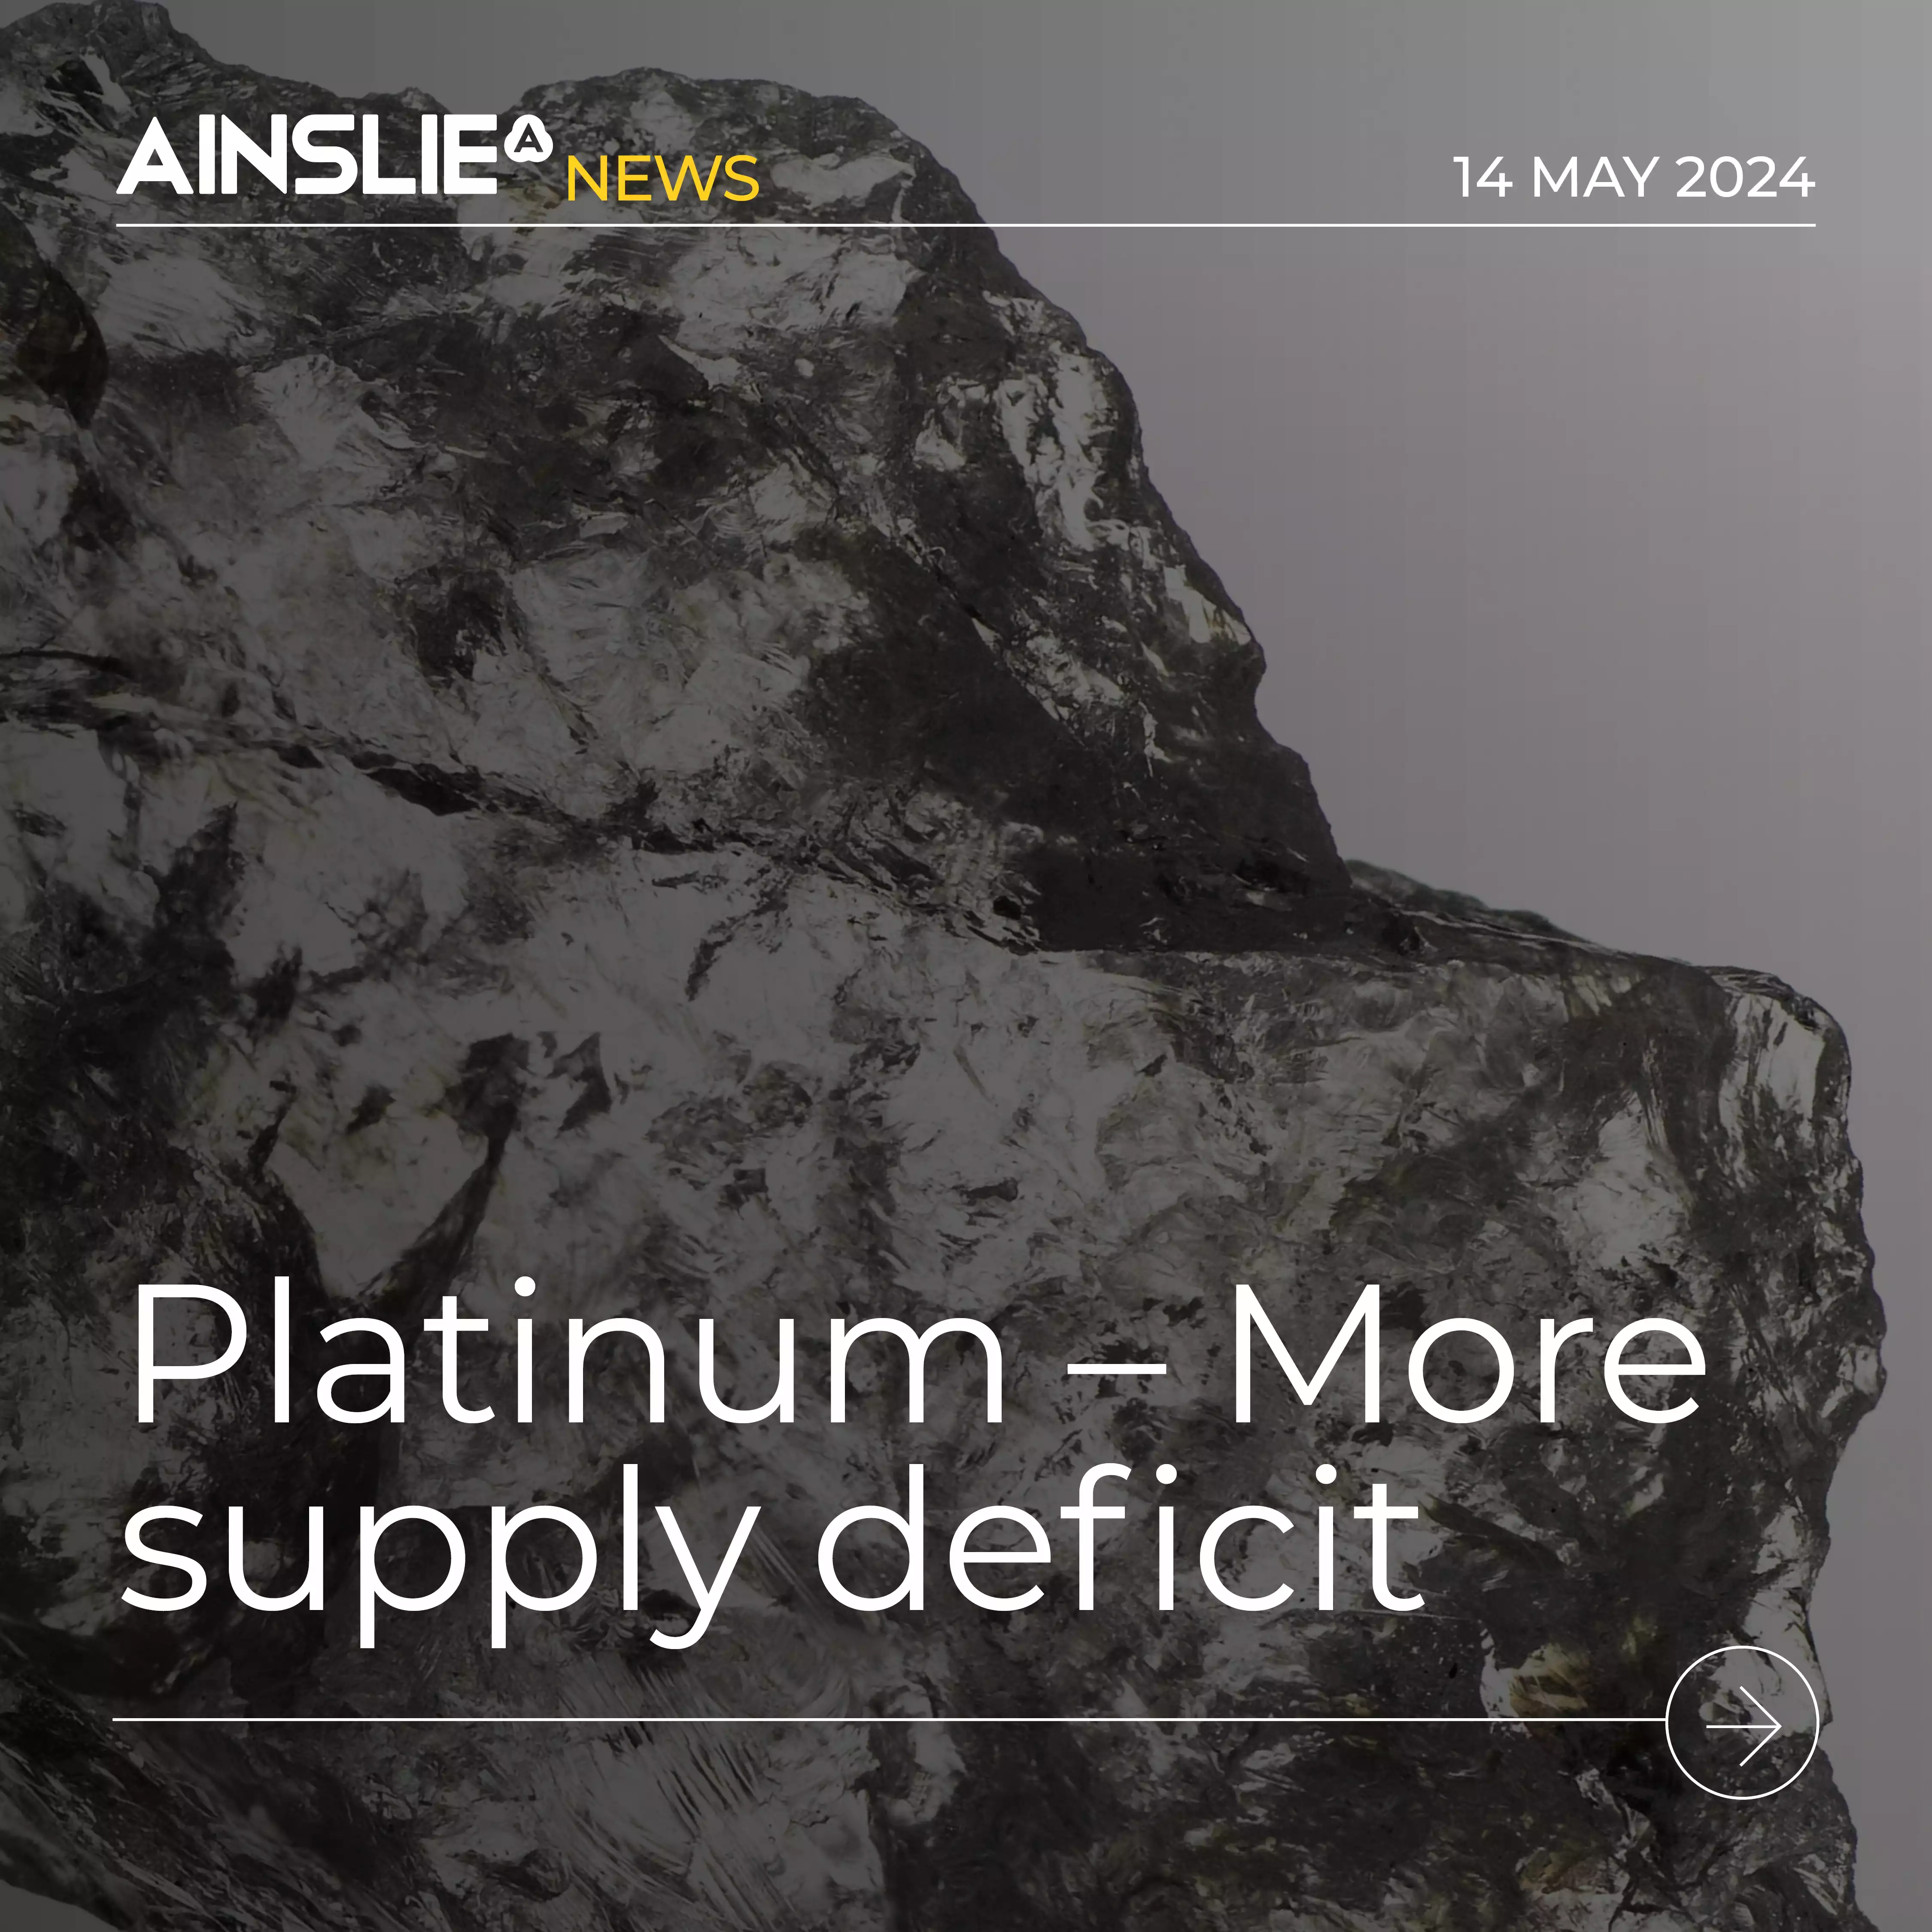 World Platinum Investment Council Quarterly – More supply deficit